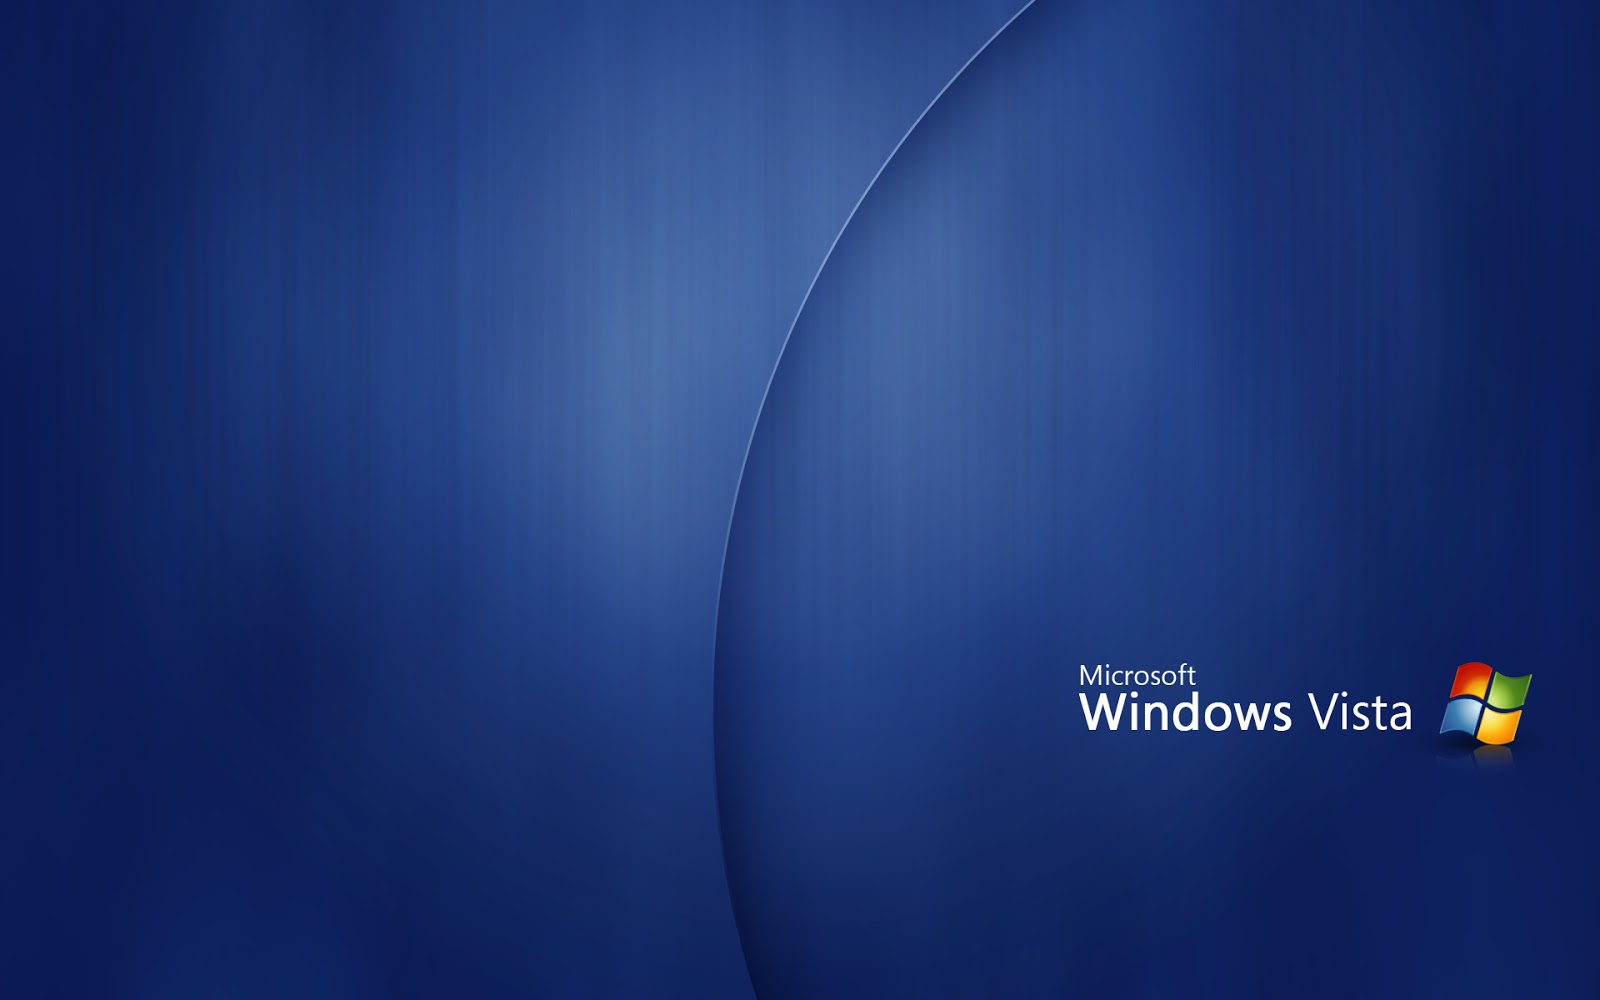 Microsoft Windows Vista Operating System HD Wallpaper And